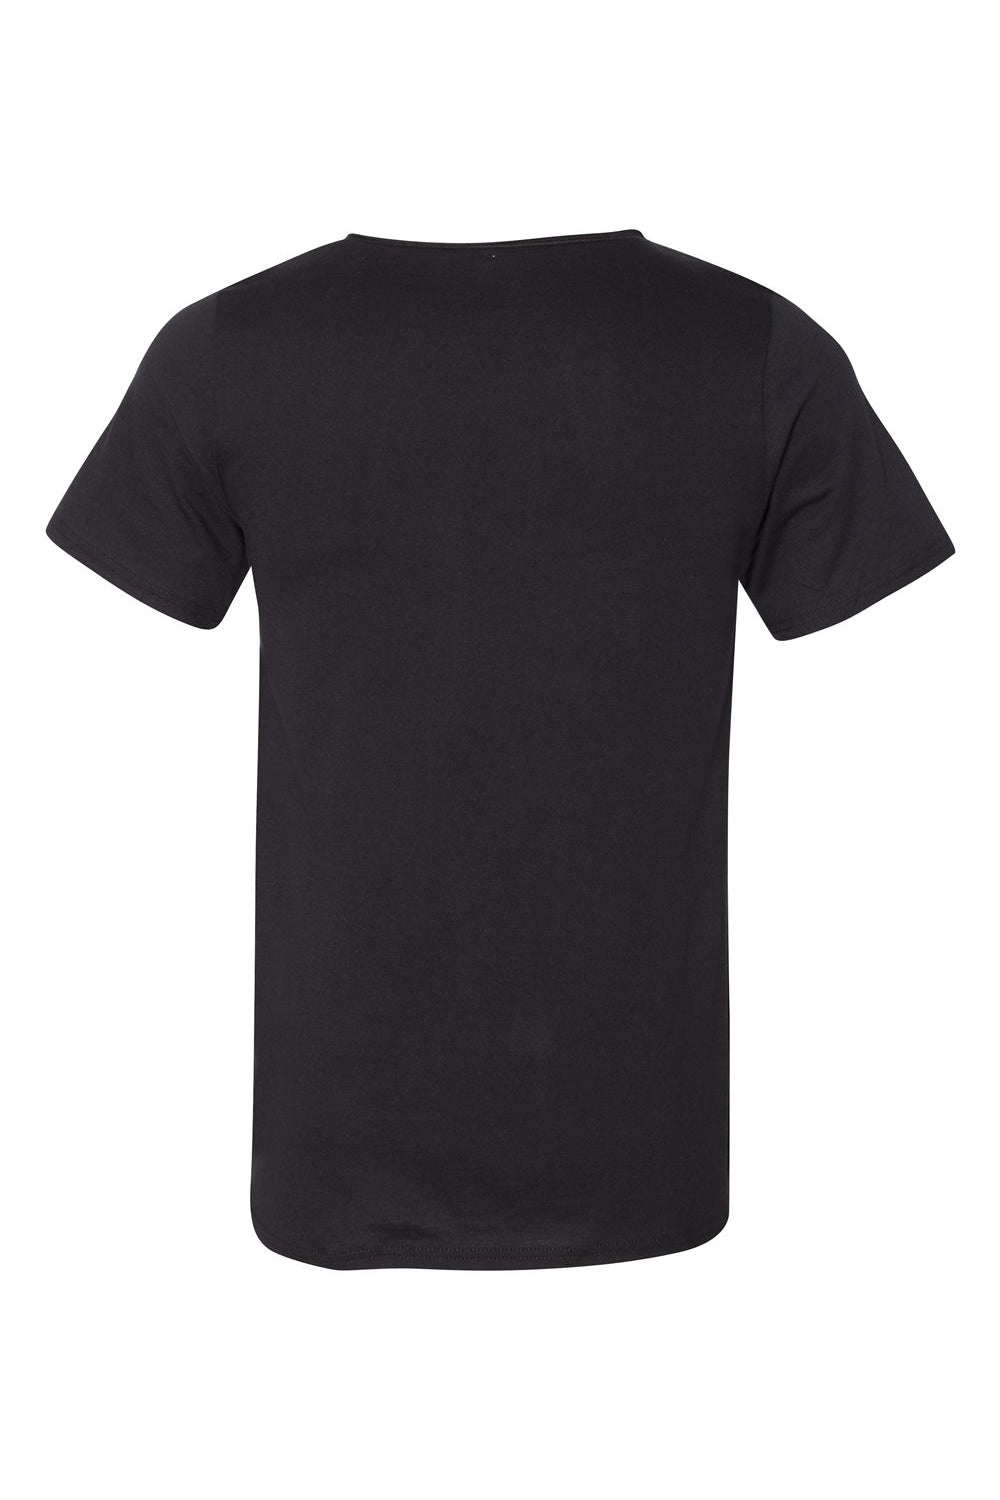 Bella + Canvas B3014/3014 Mens Jersey Short Sleeve Crewneck T-Shirt Black Flat Back